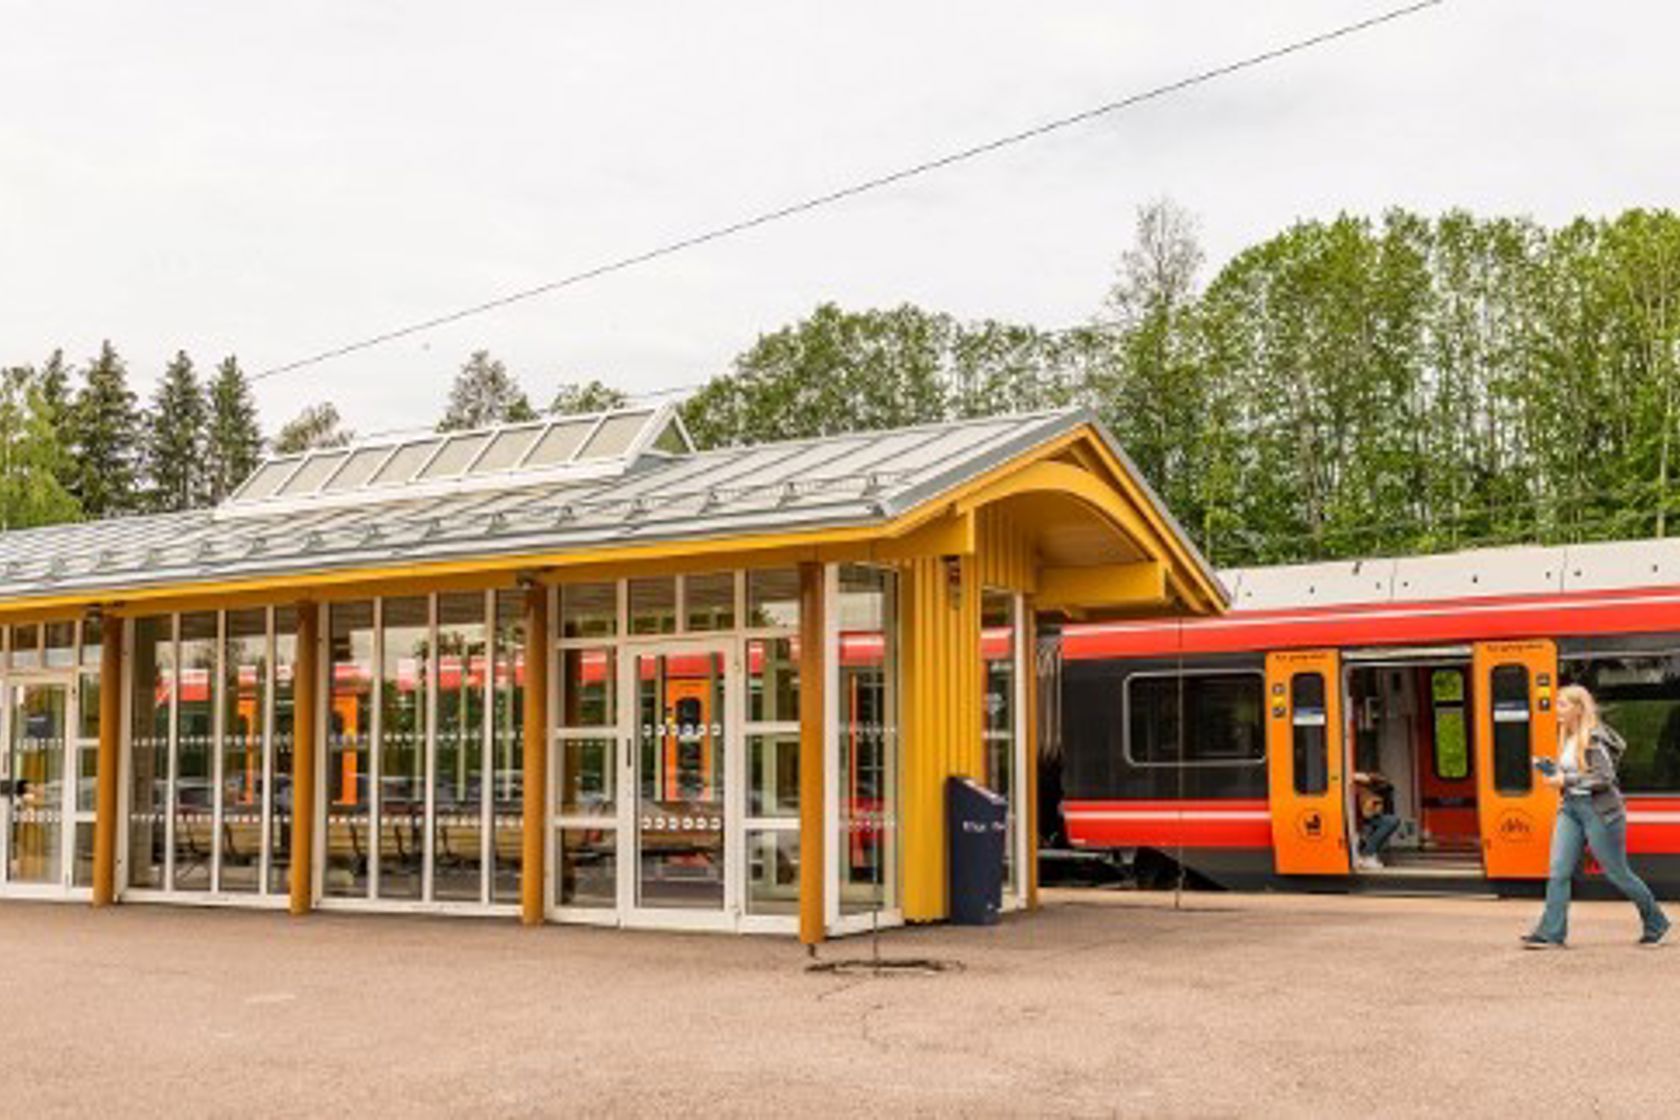 External view of Leirsund station